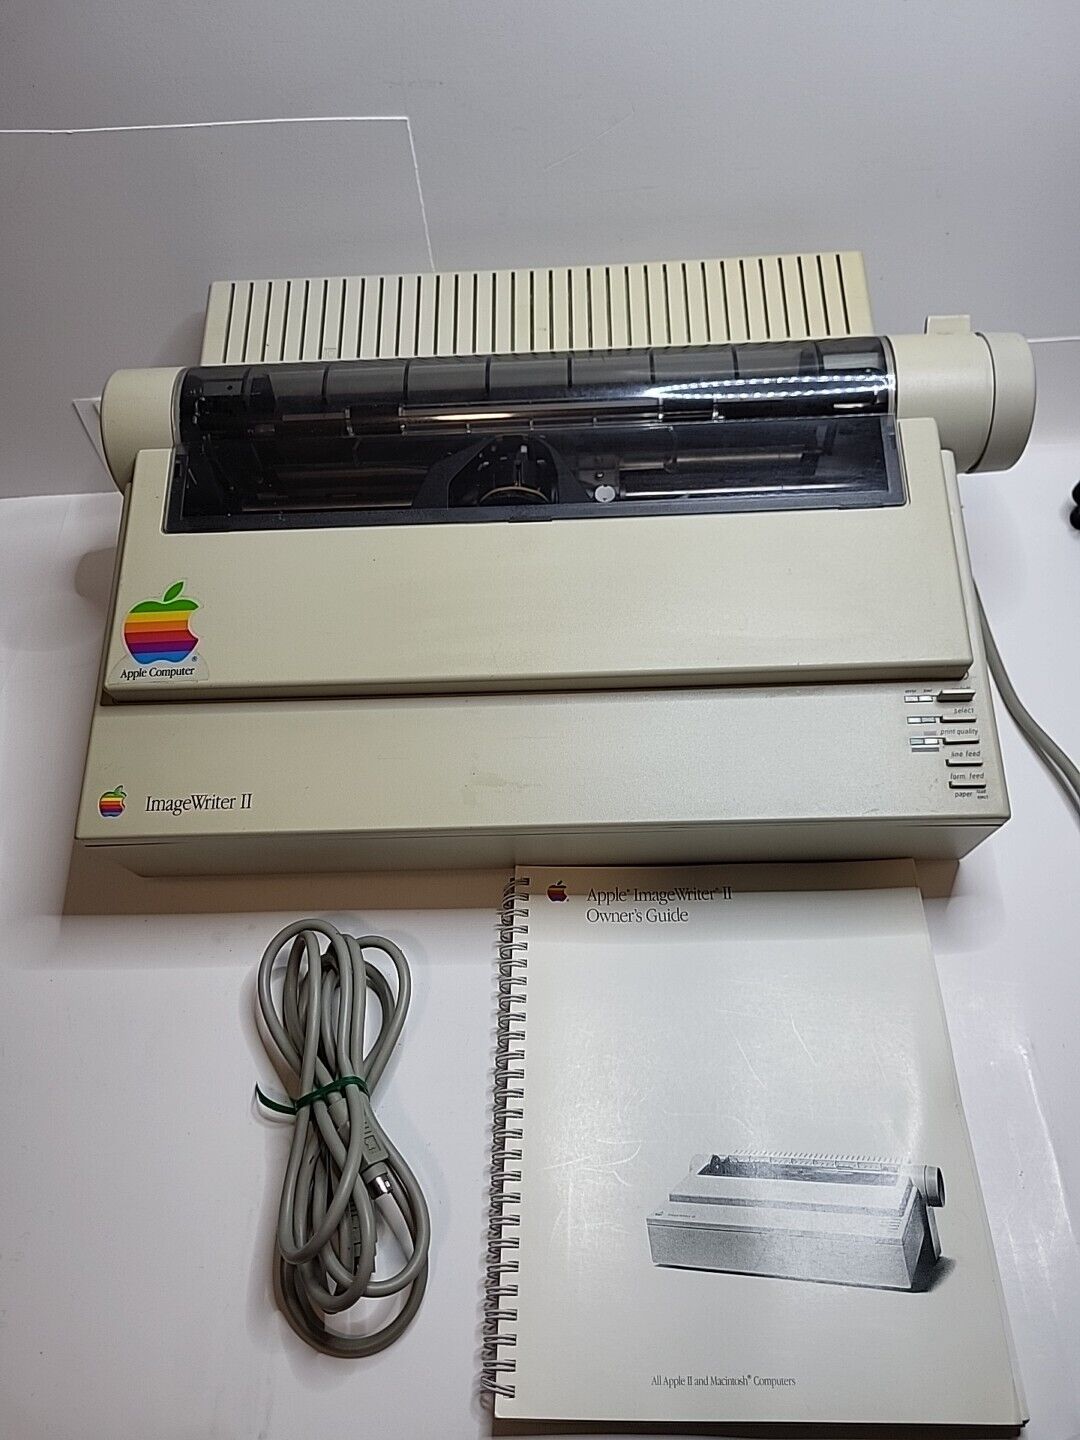 Apple ImageWriter II 2 - Model A9M0320 - Printer w/ Manual 1985 - Powers On